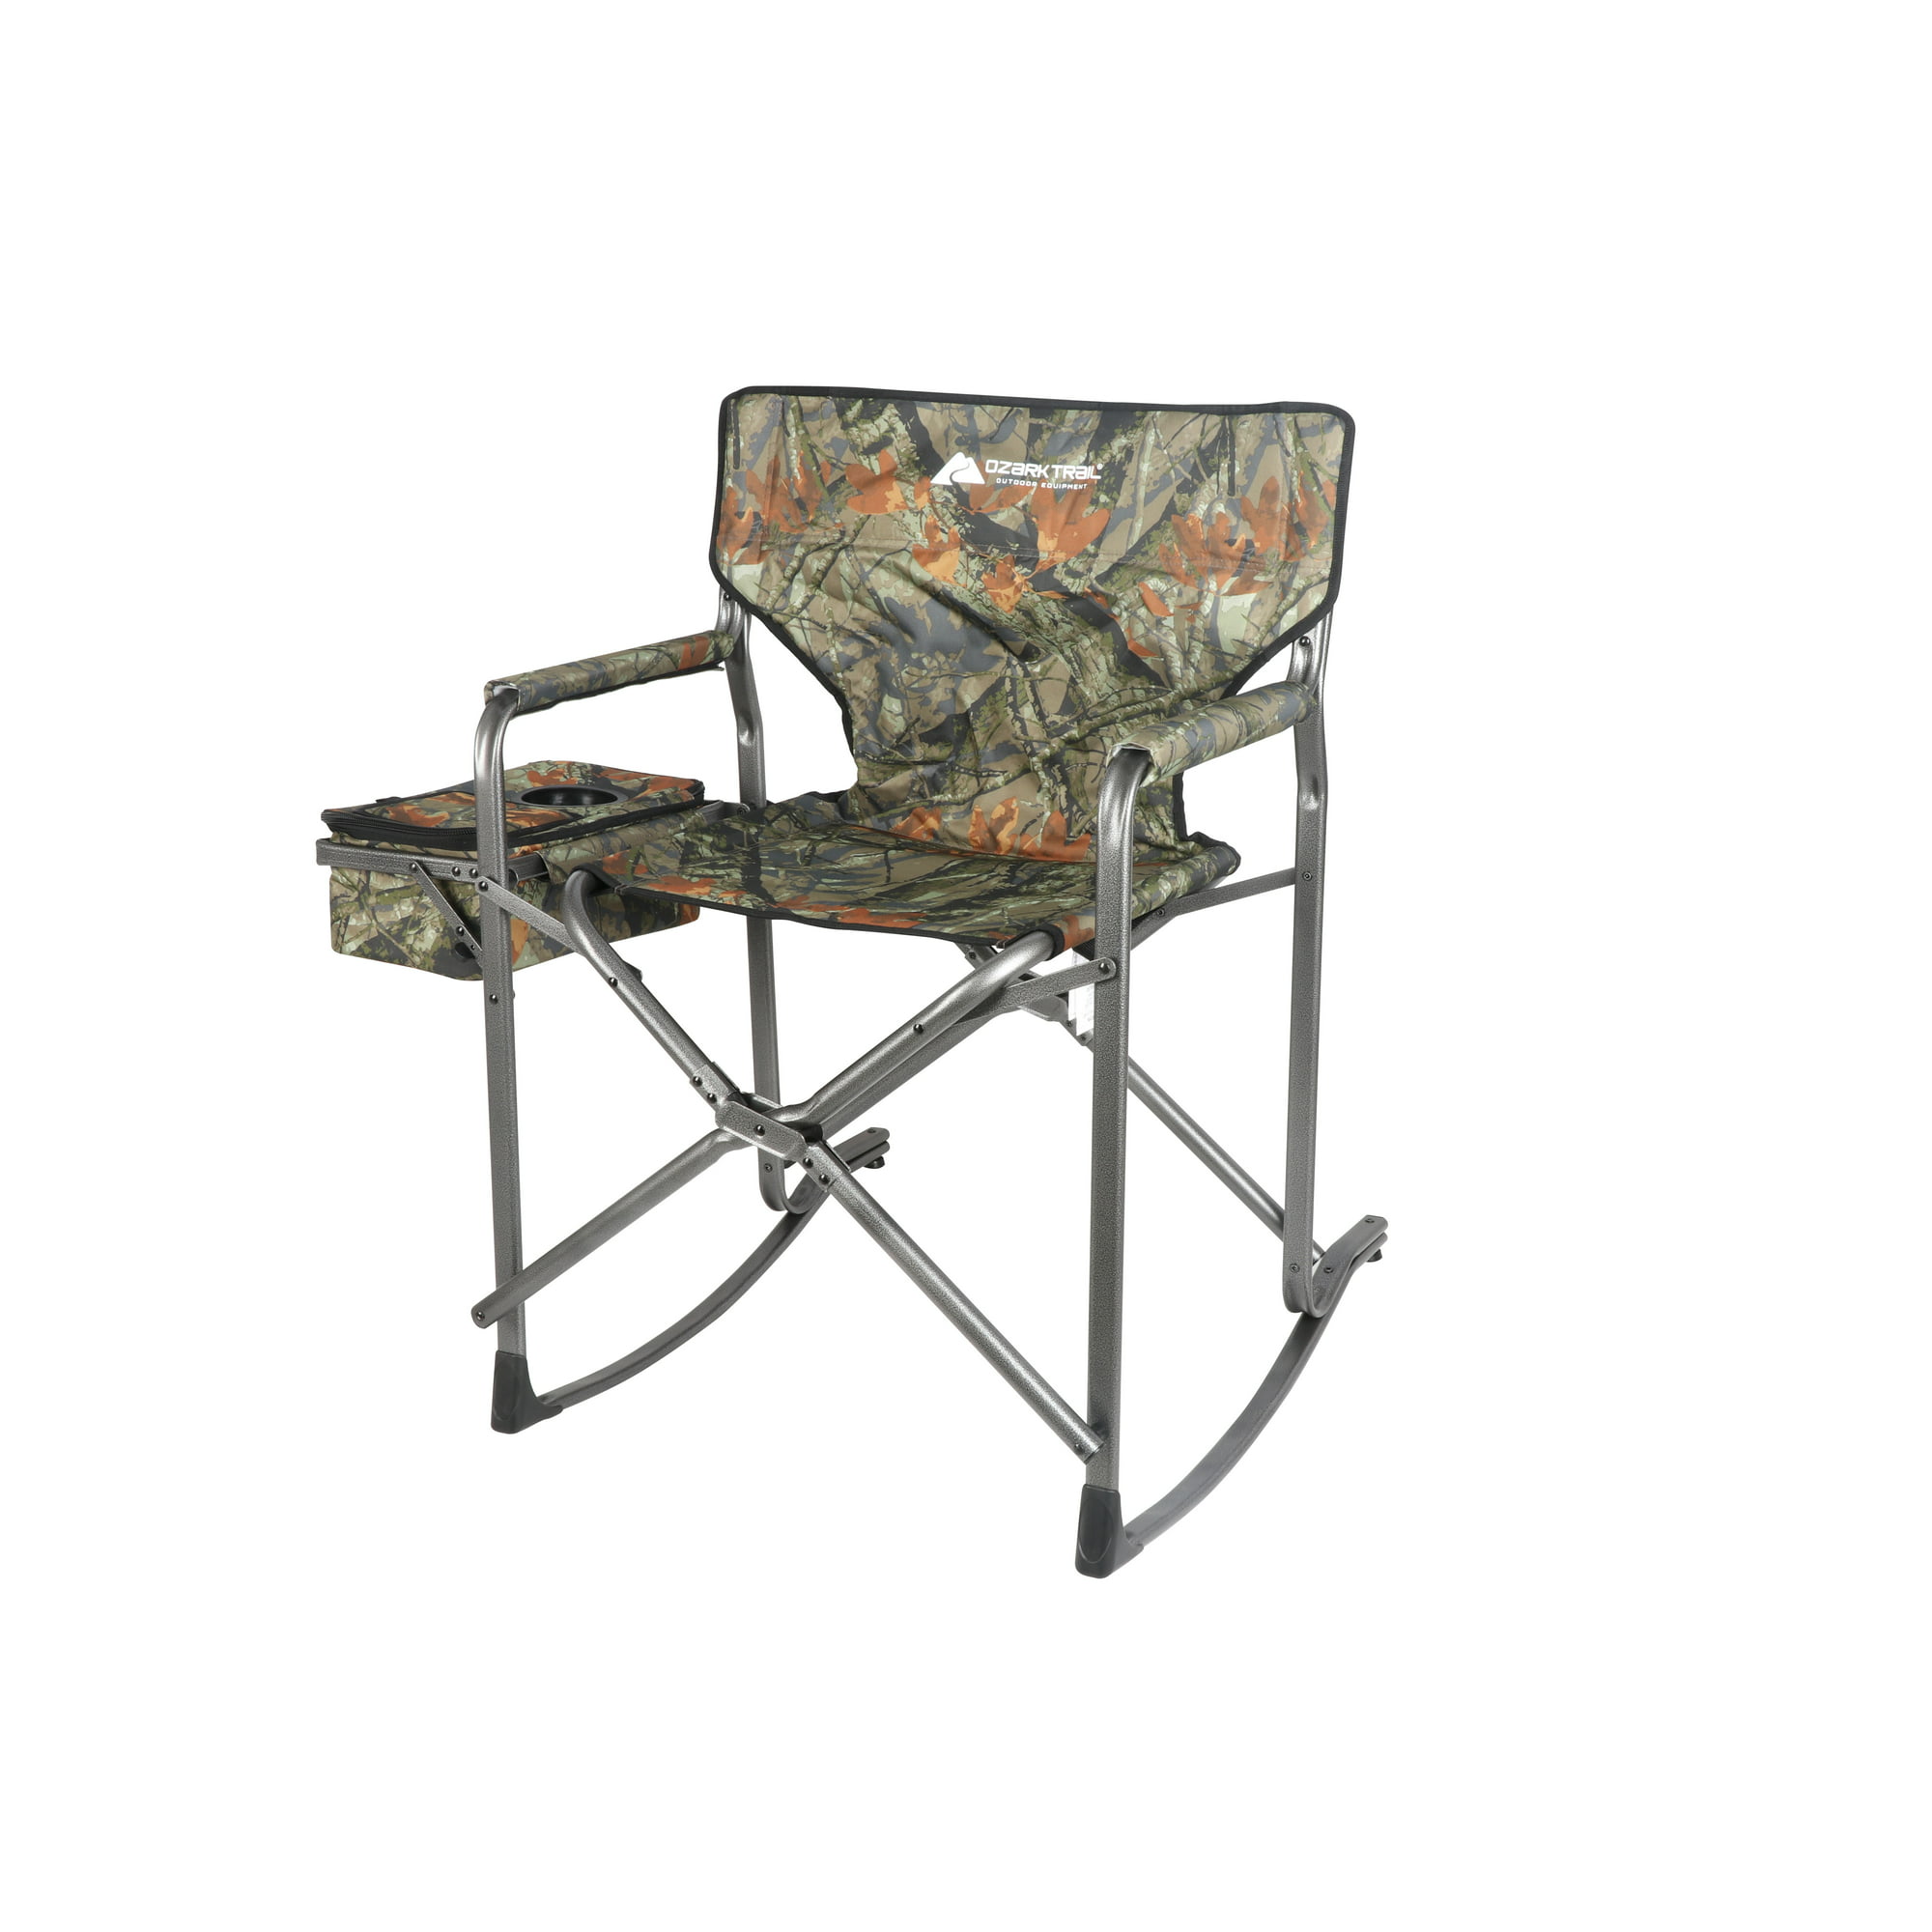 Ozark Trail Bull Creek Director Camp Rocking Chair With Cooler Camouflage Walmart Com Walmart Com